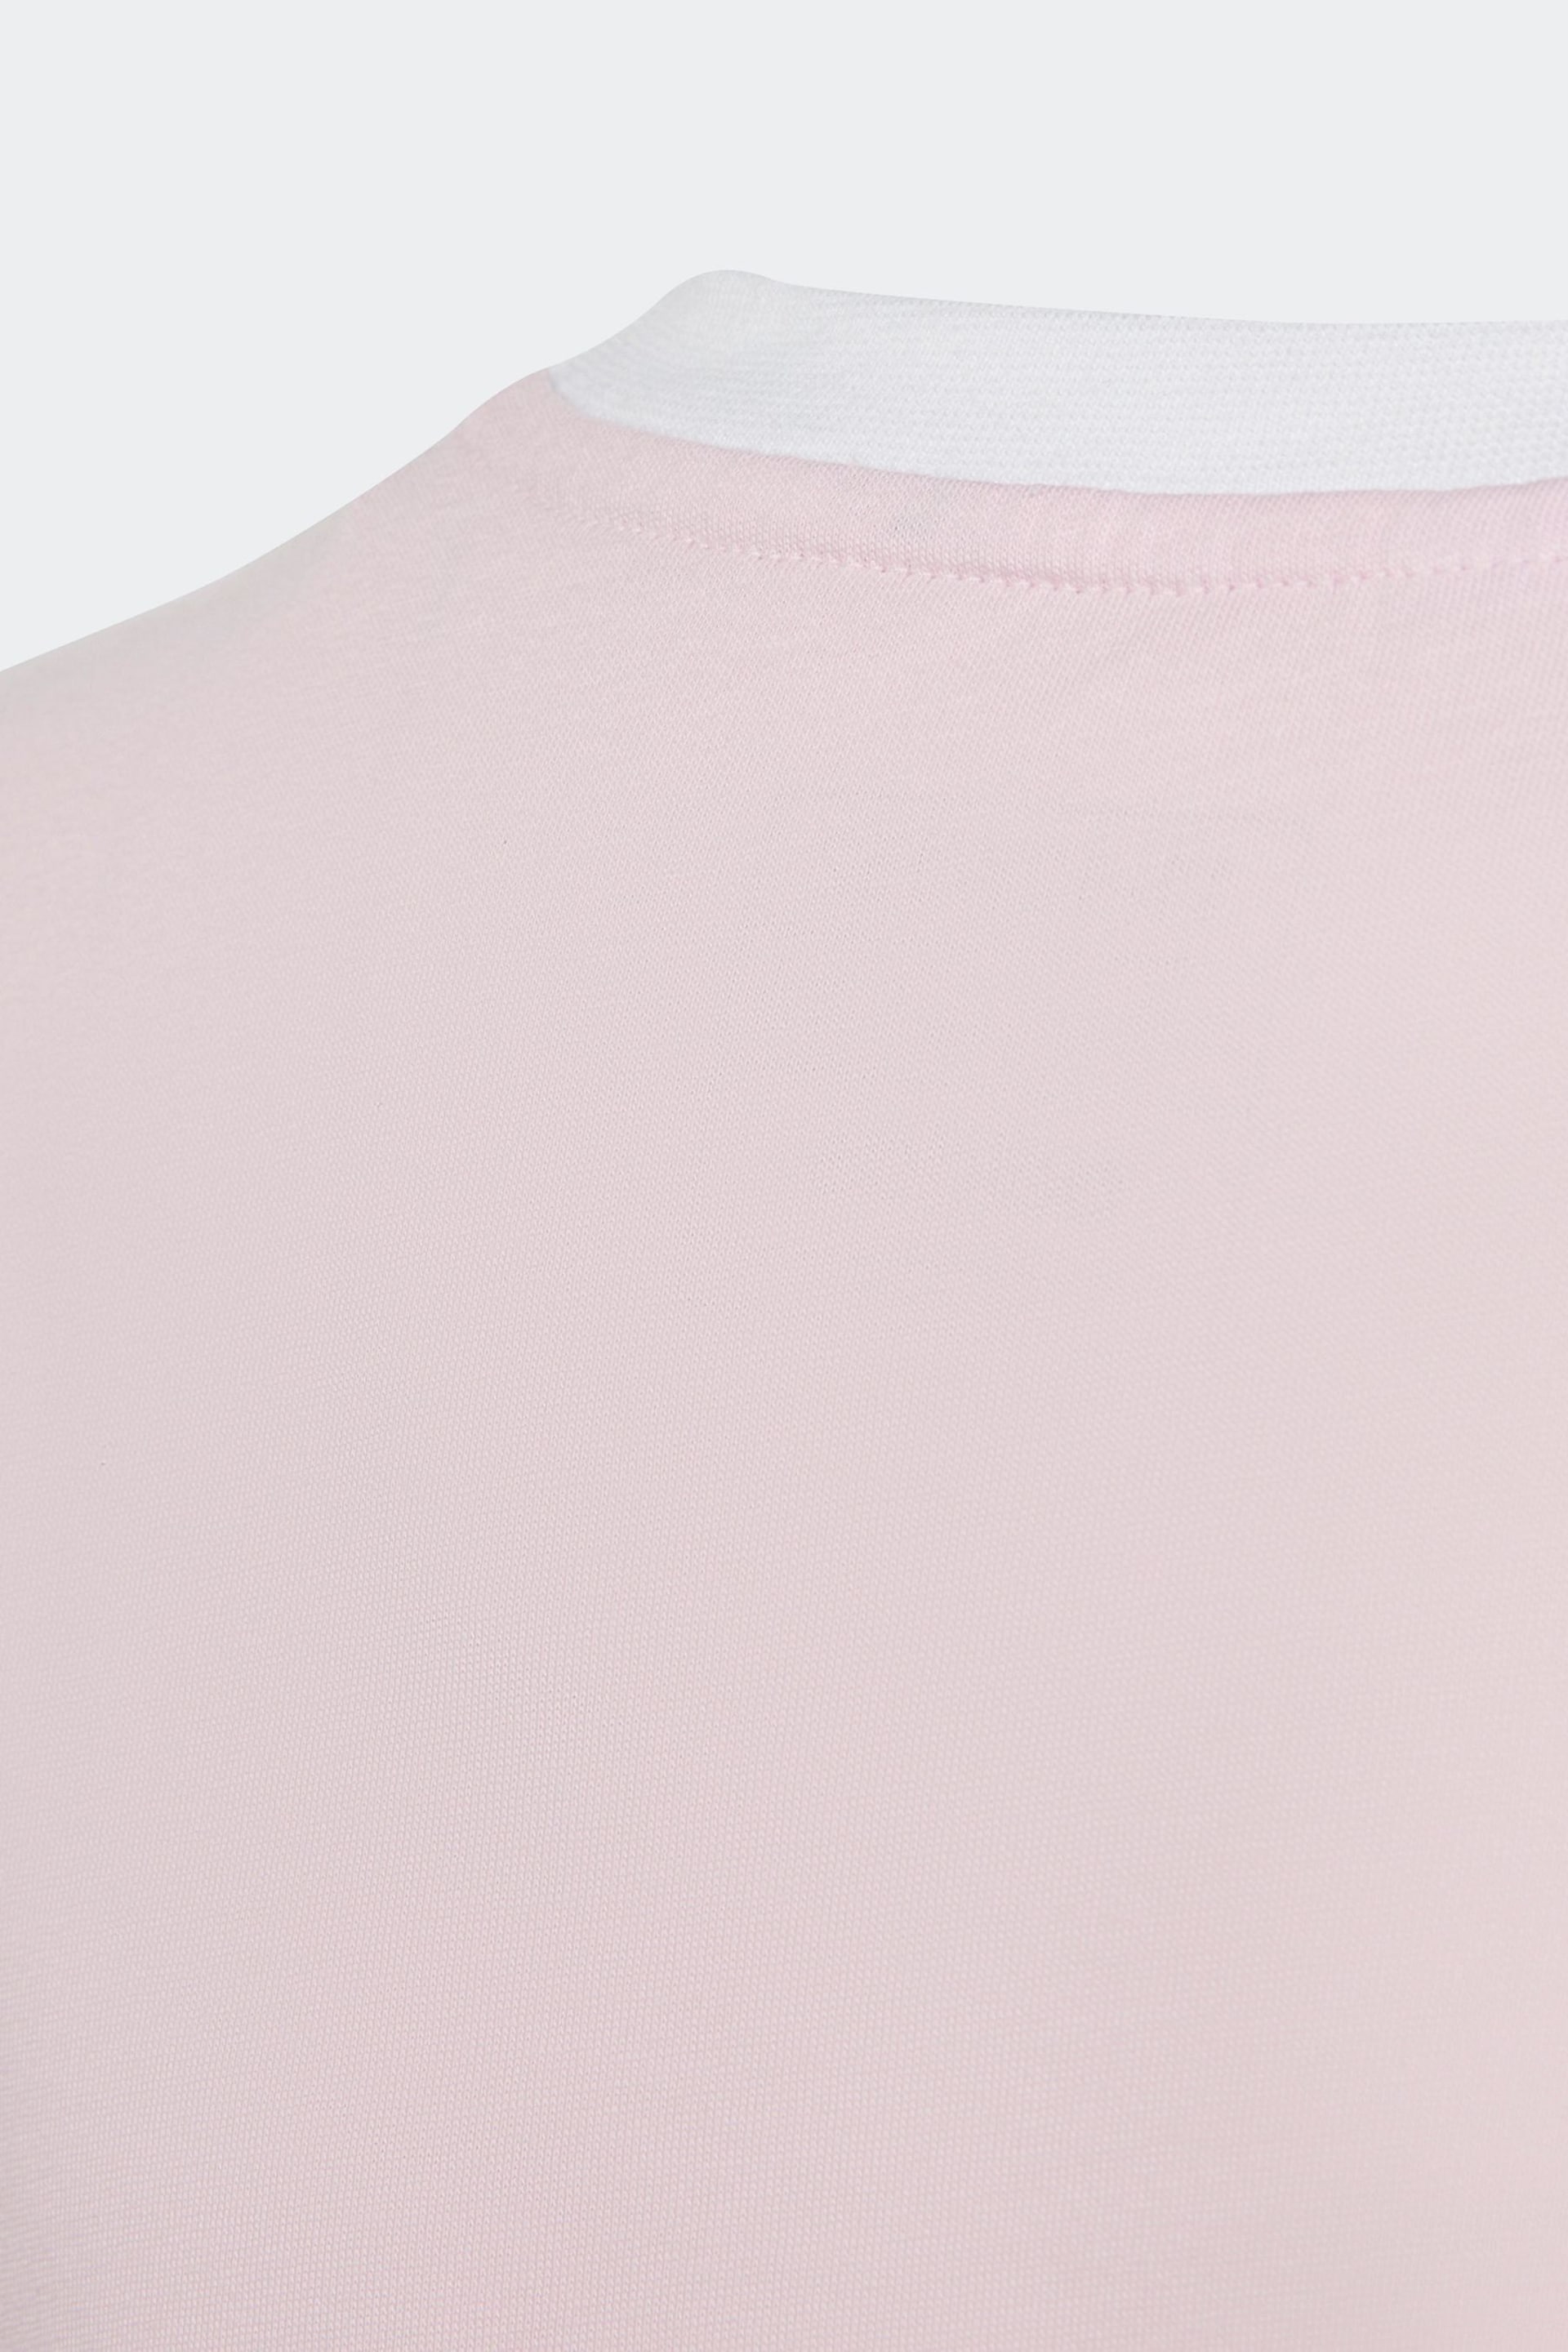 adidas Pink 3-Stripe Essential Boyfriend Fit T-Shirt - Image 14 of 15